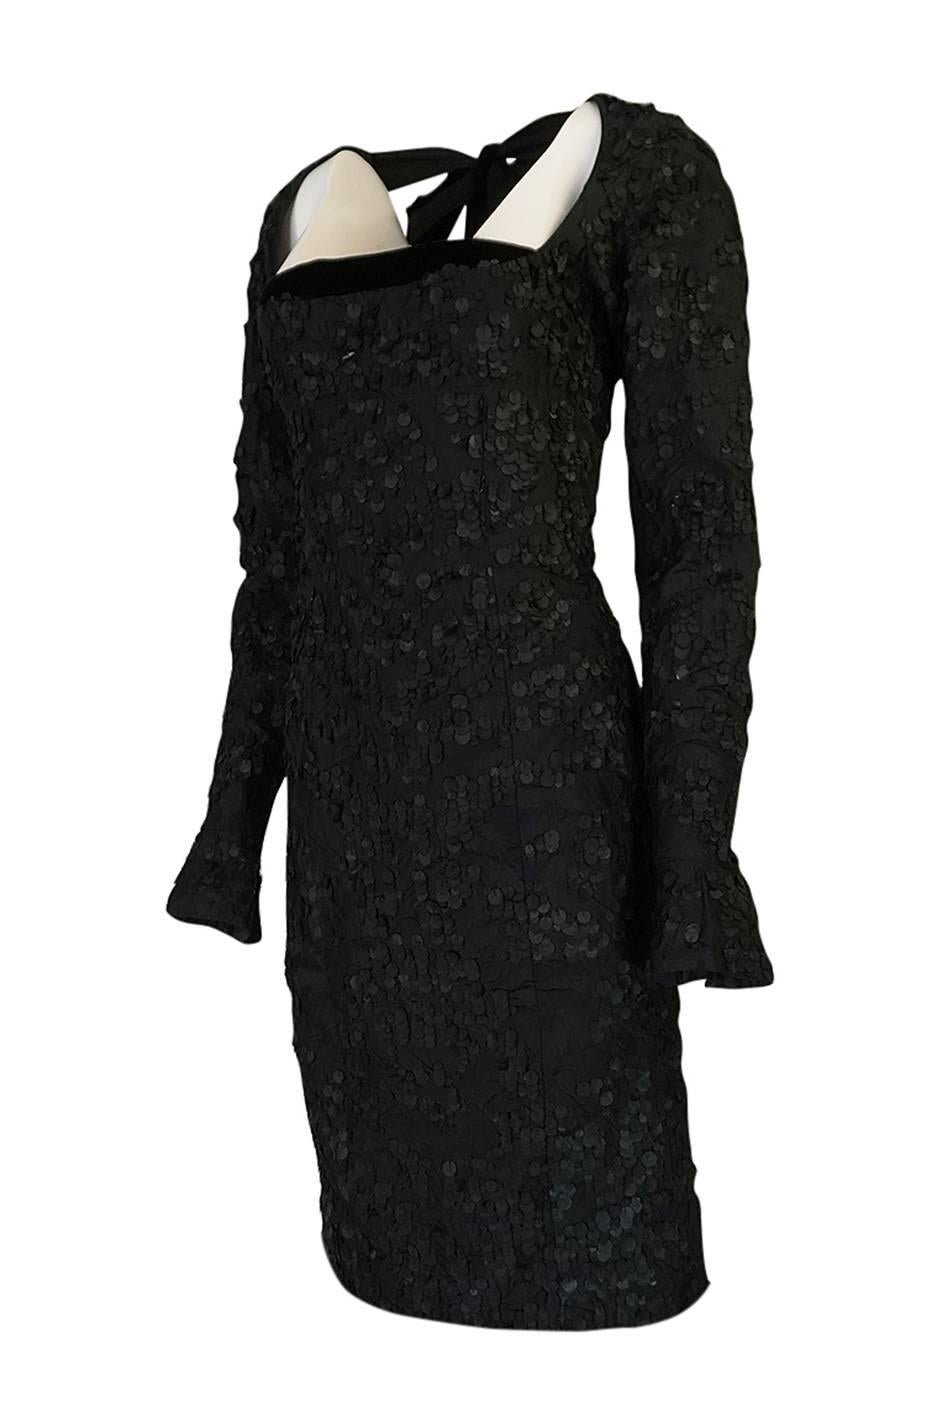 Black Tom Ford for Yves Saint Laurent Runway Textured Dress, F/W 2002 